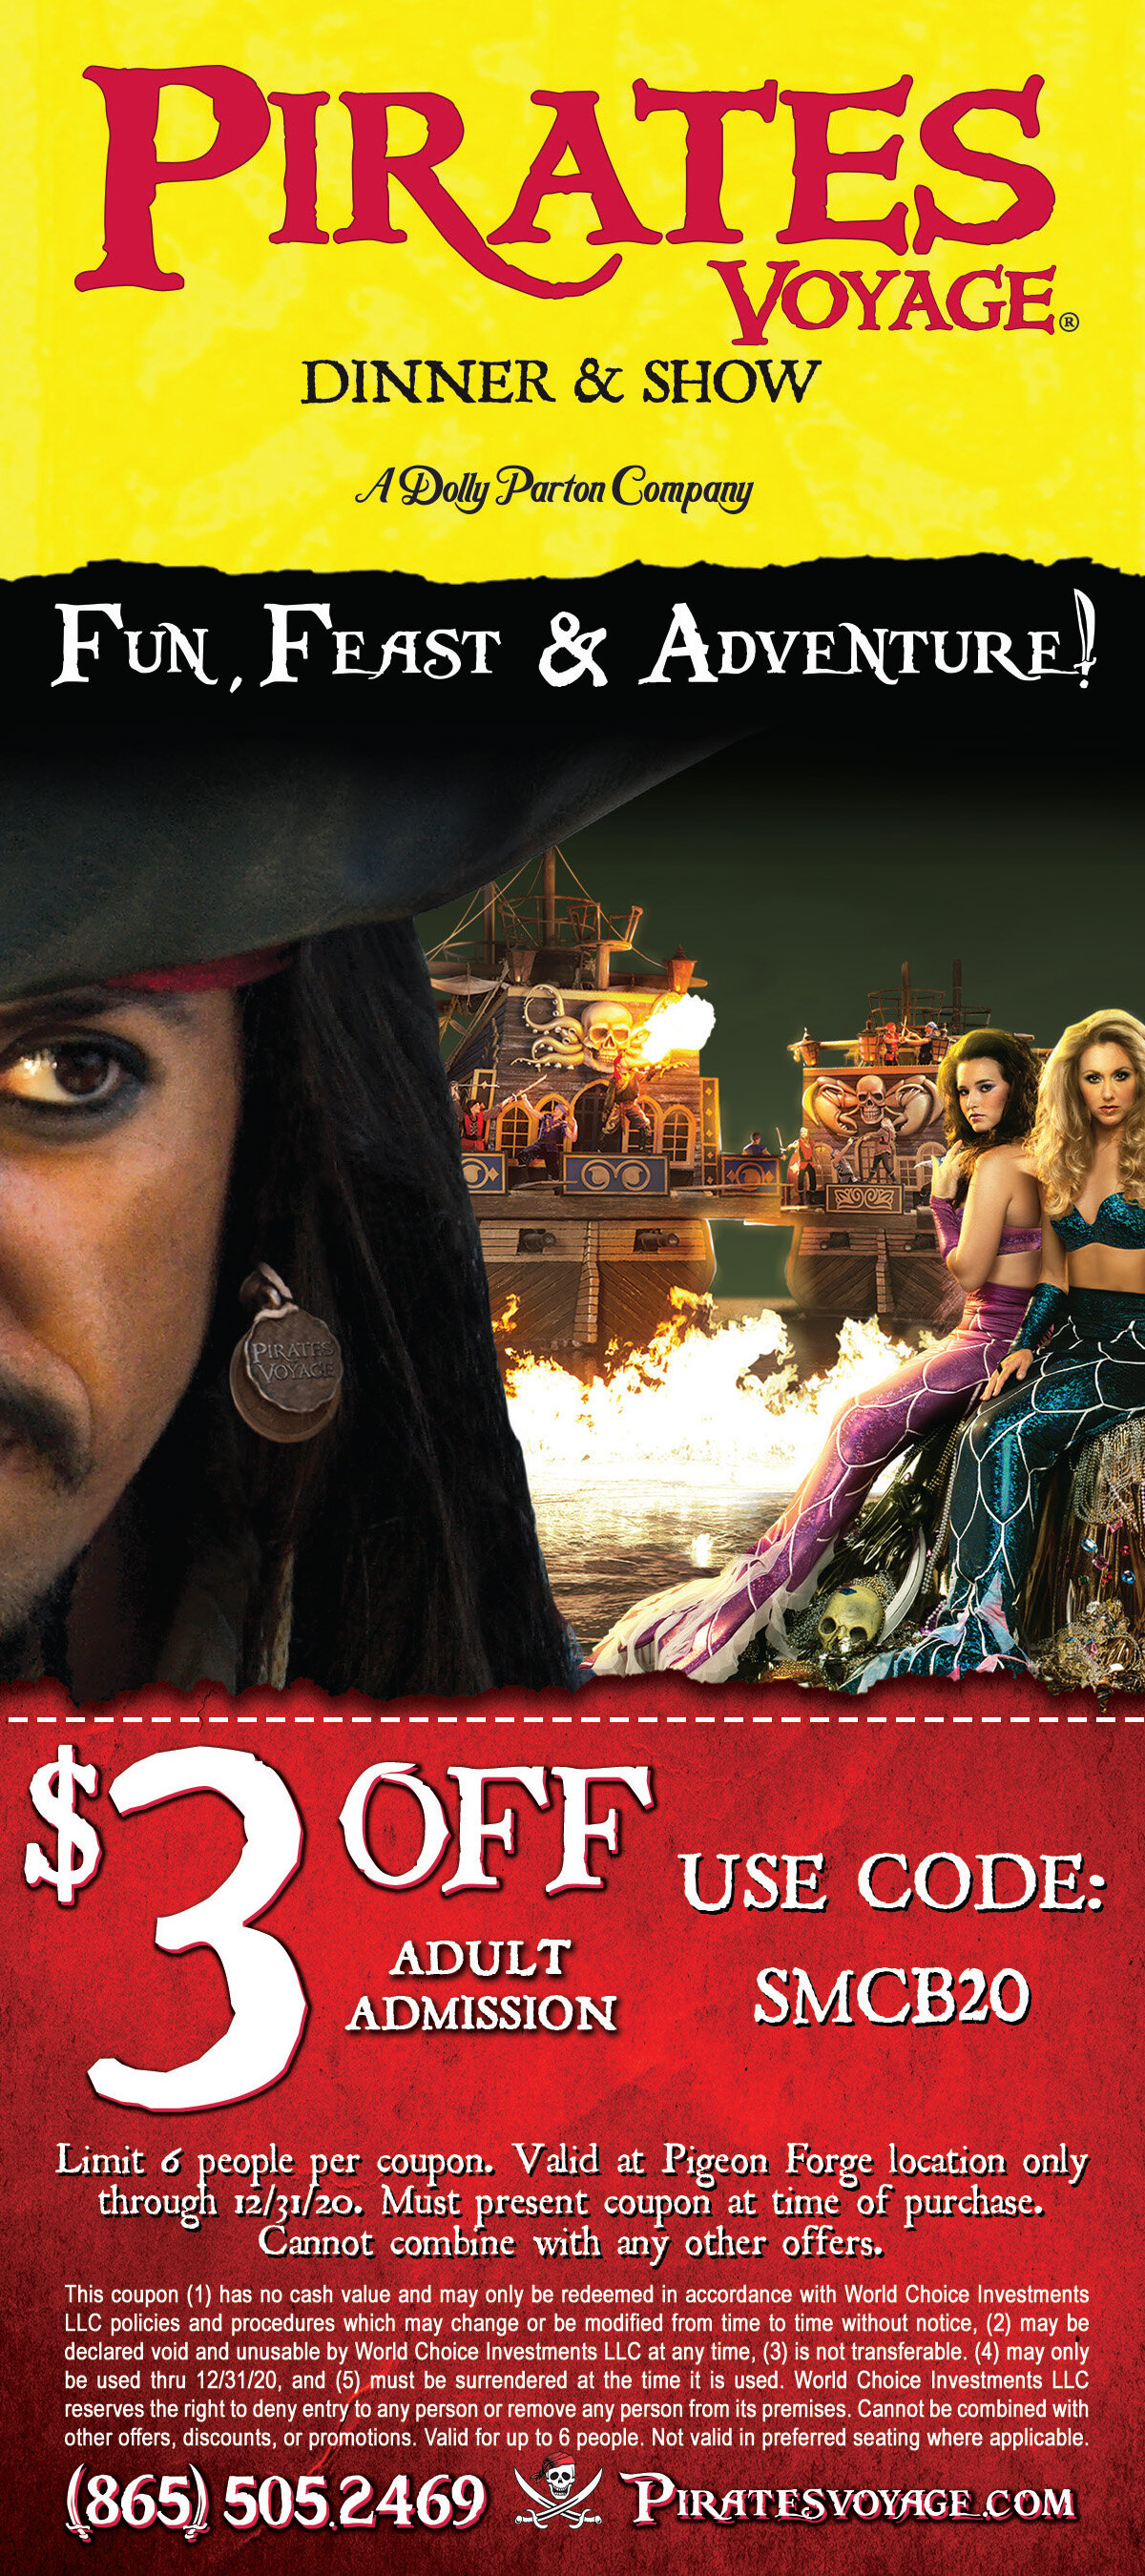 pirates voyage tickets cost